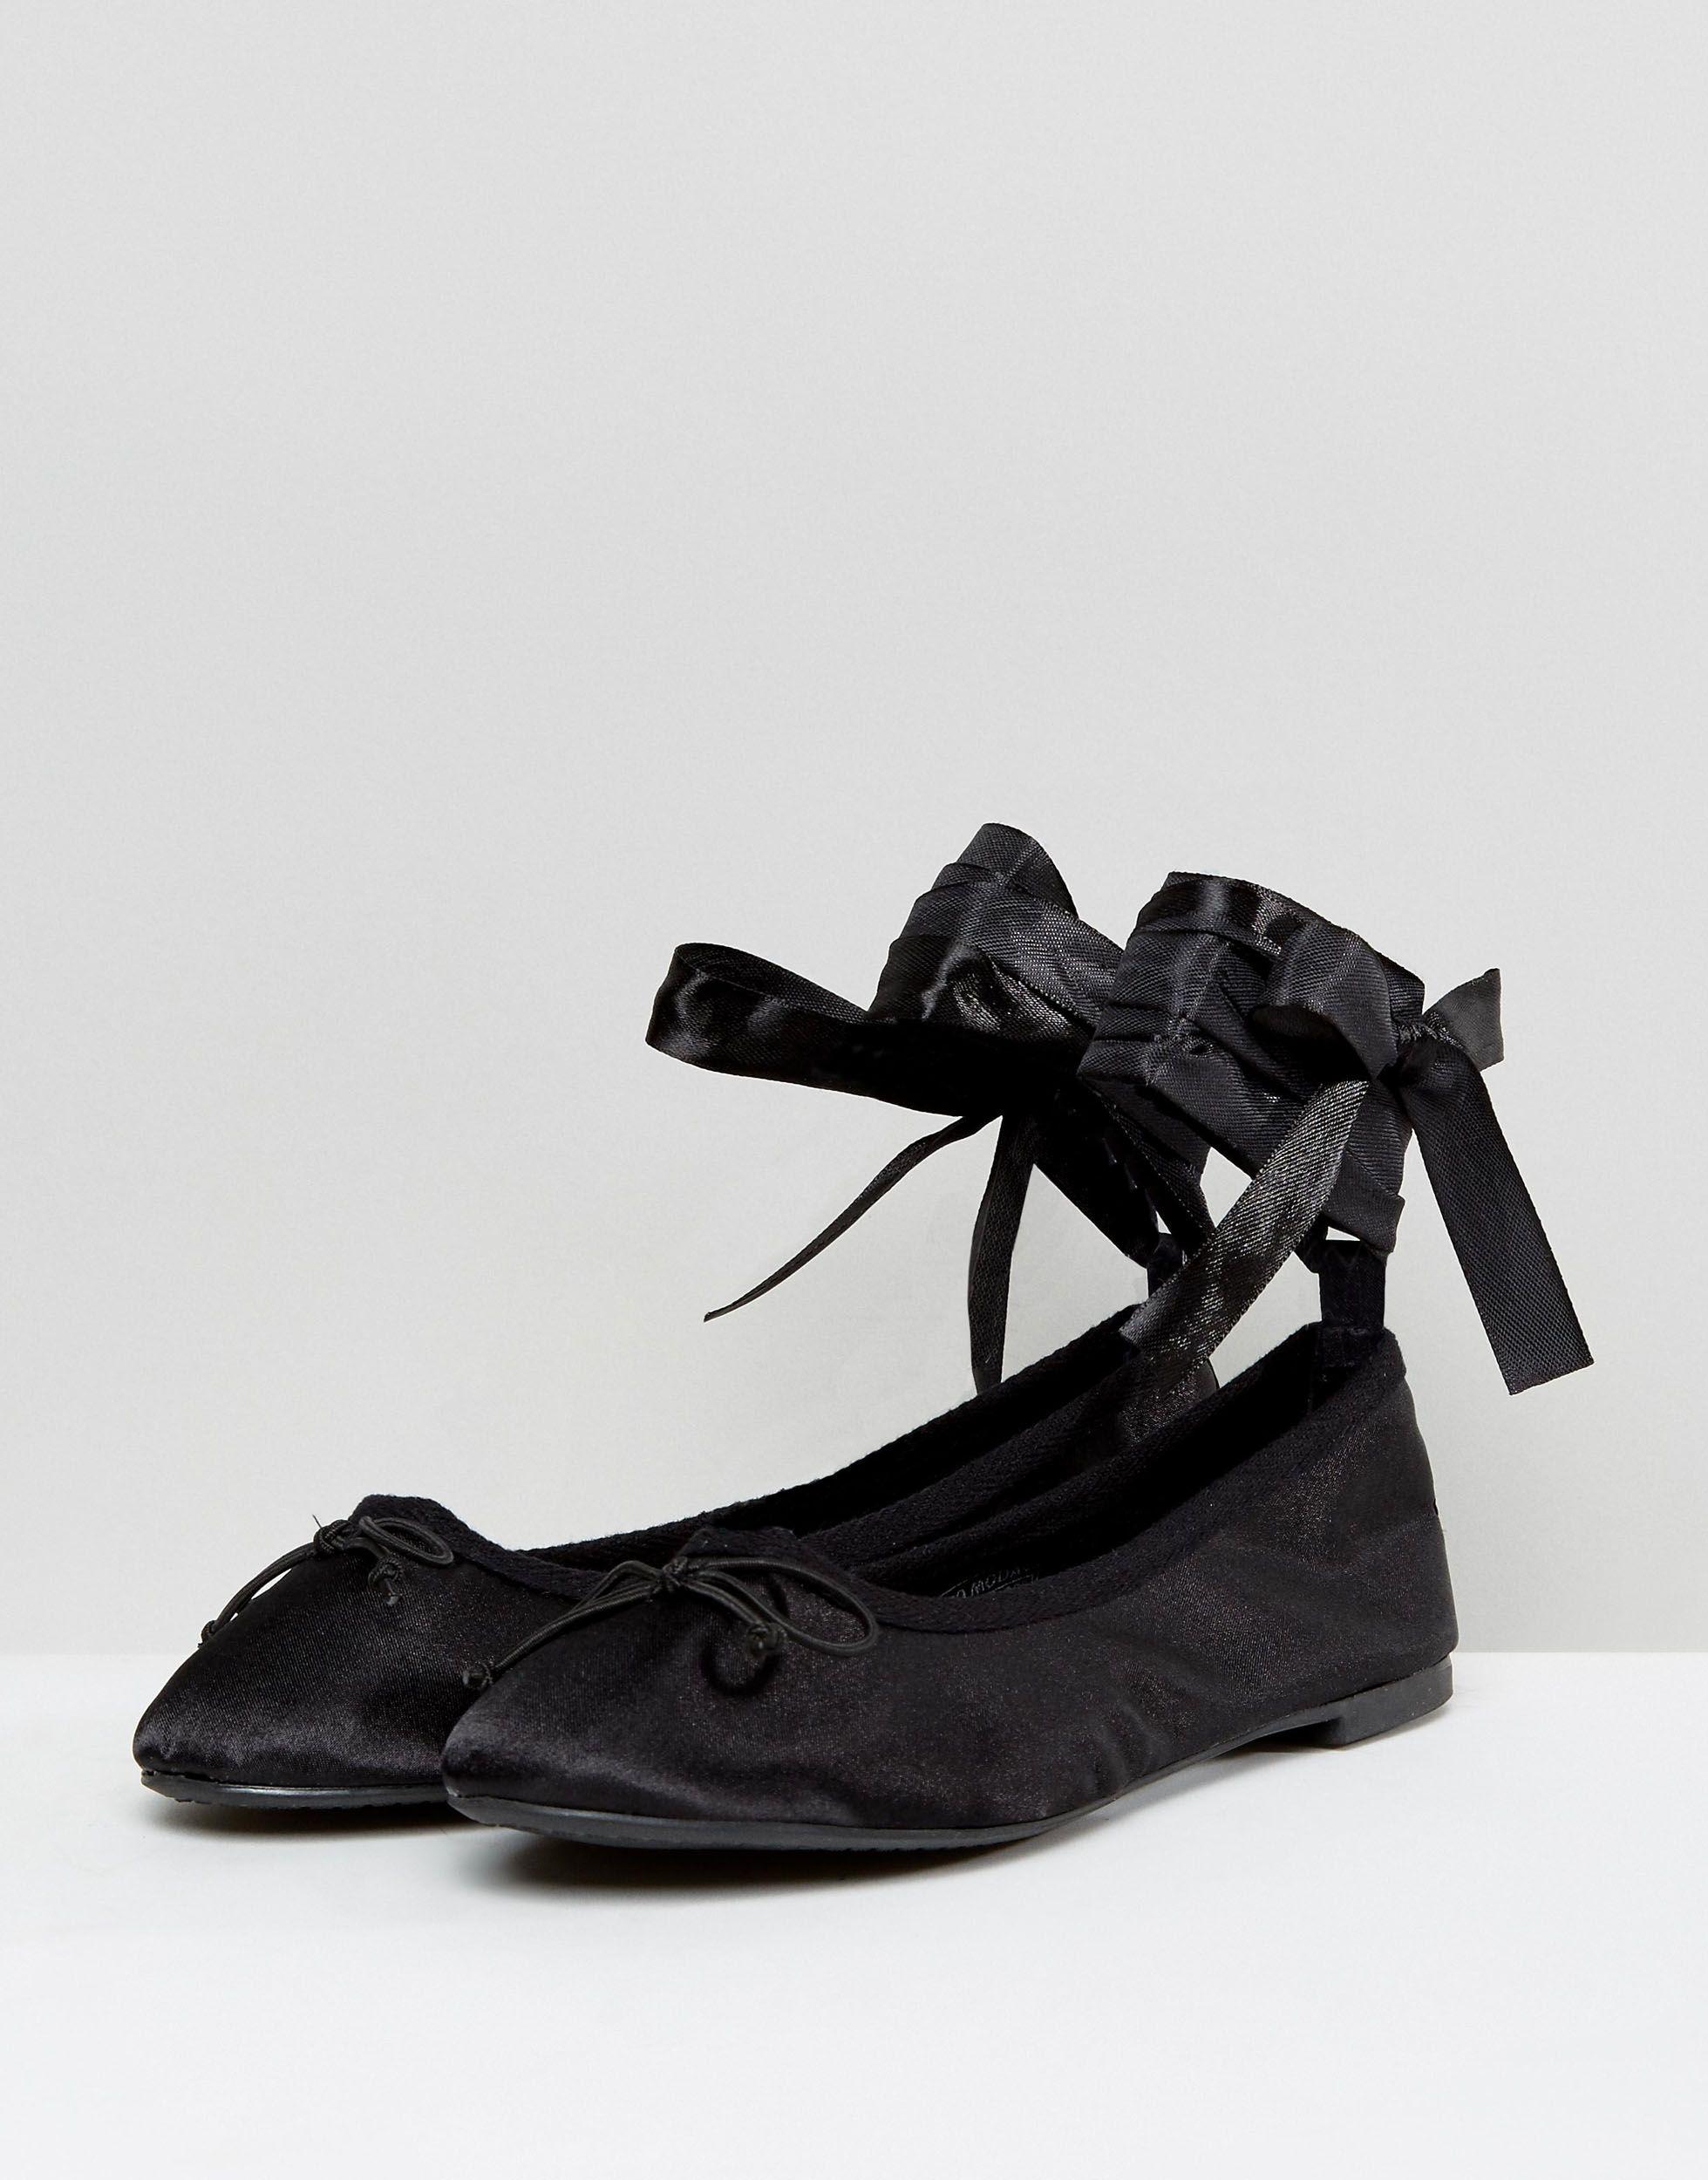 Vero Moda Tie Up Ballerina Pumps in Black | Lyst